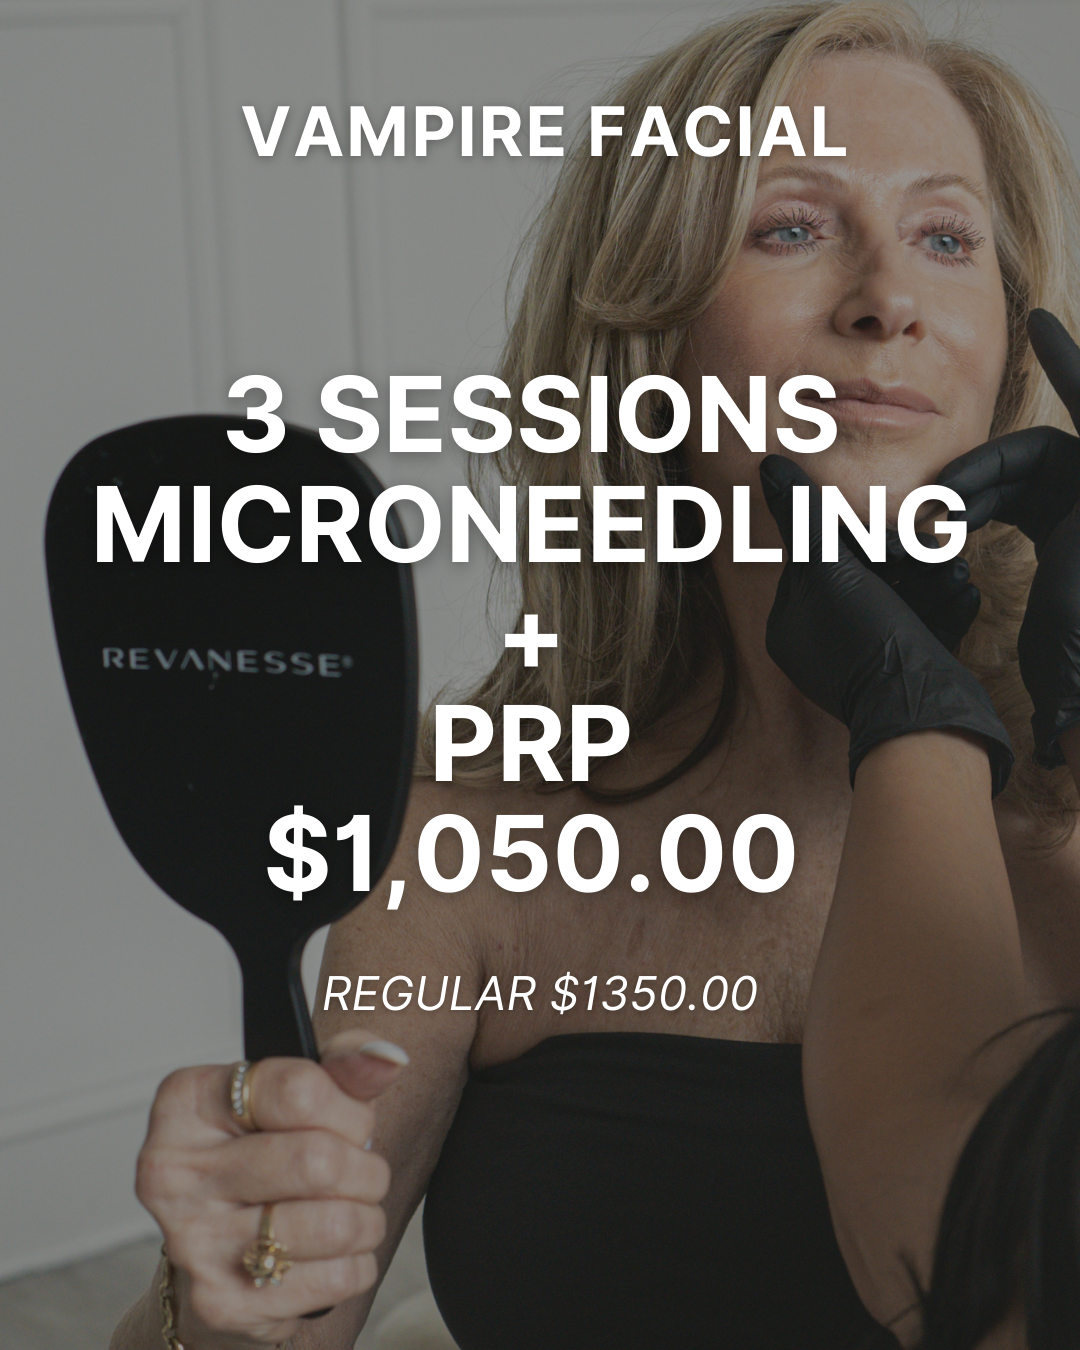 vampire facial special, microneedling and prp facial promo burlington